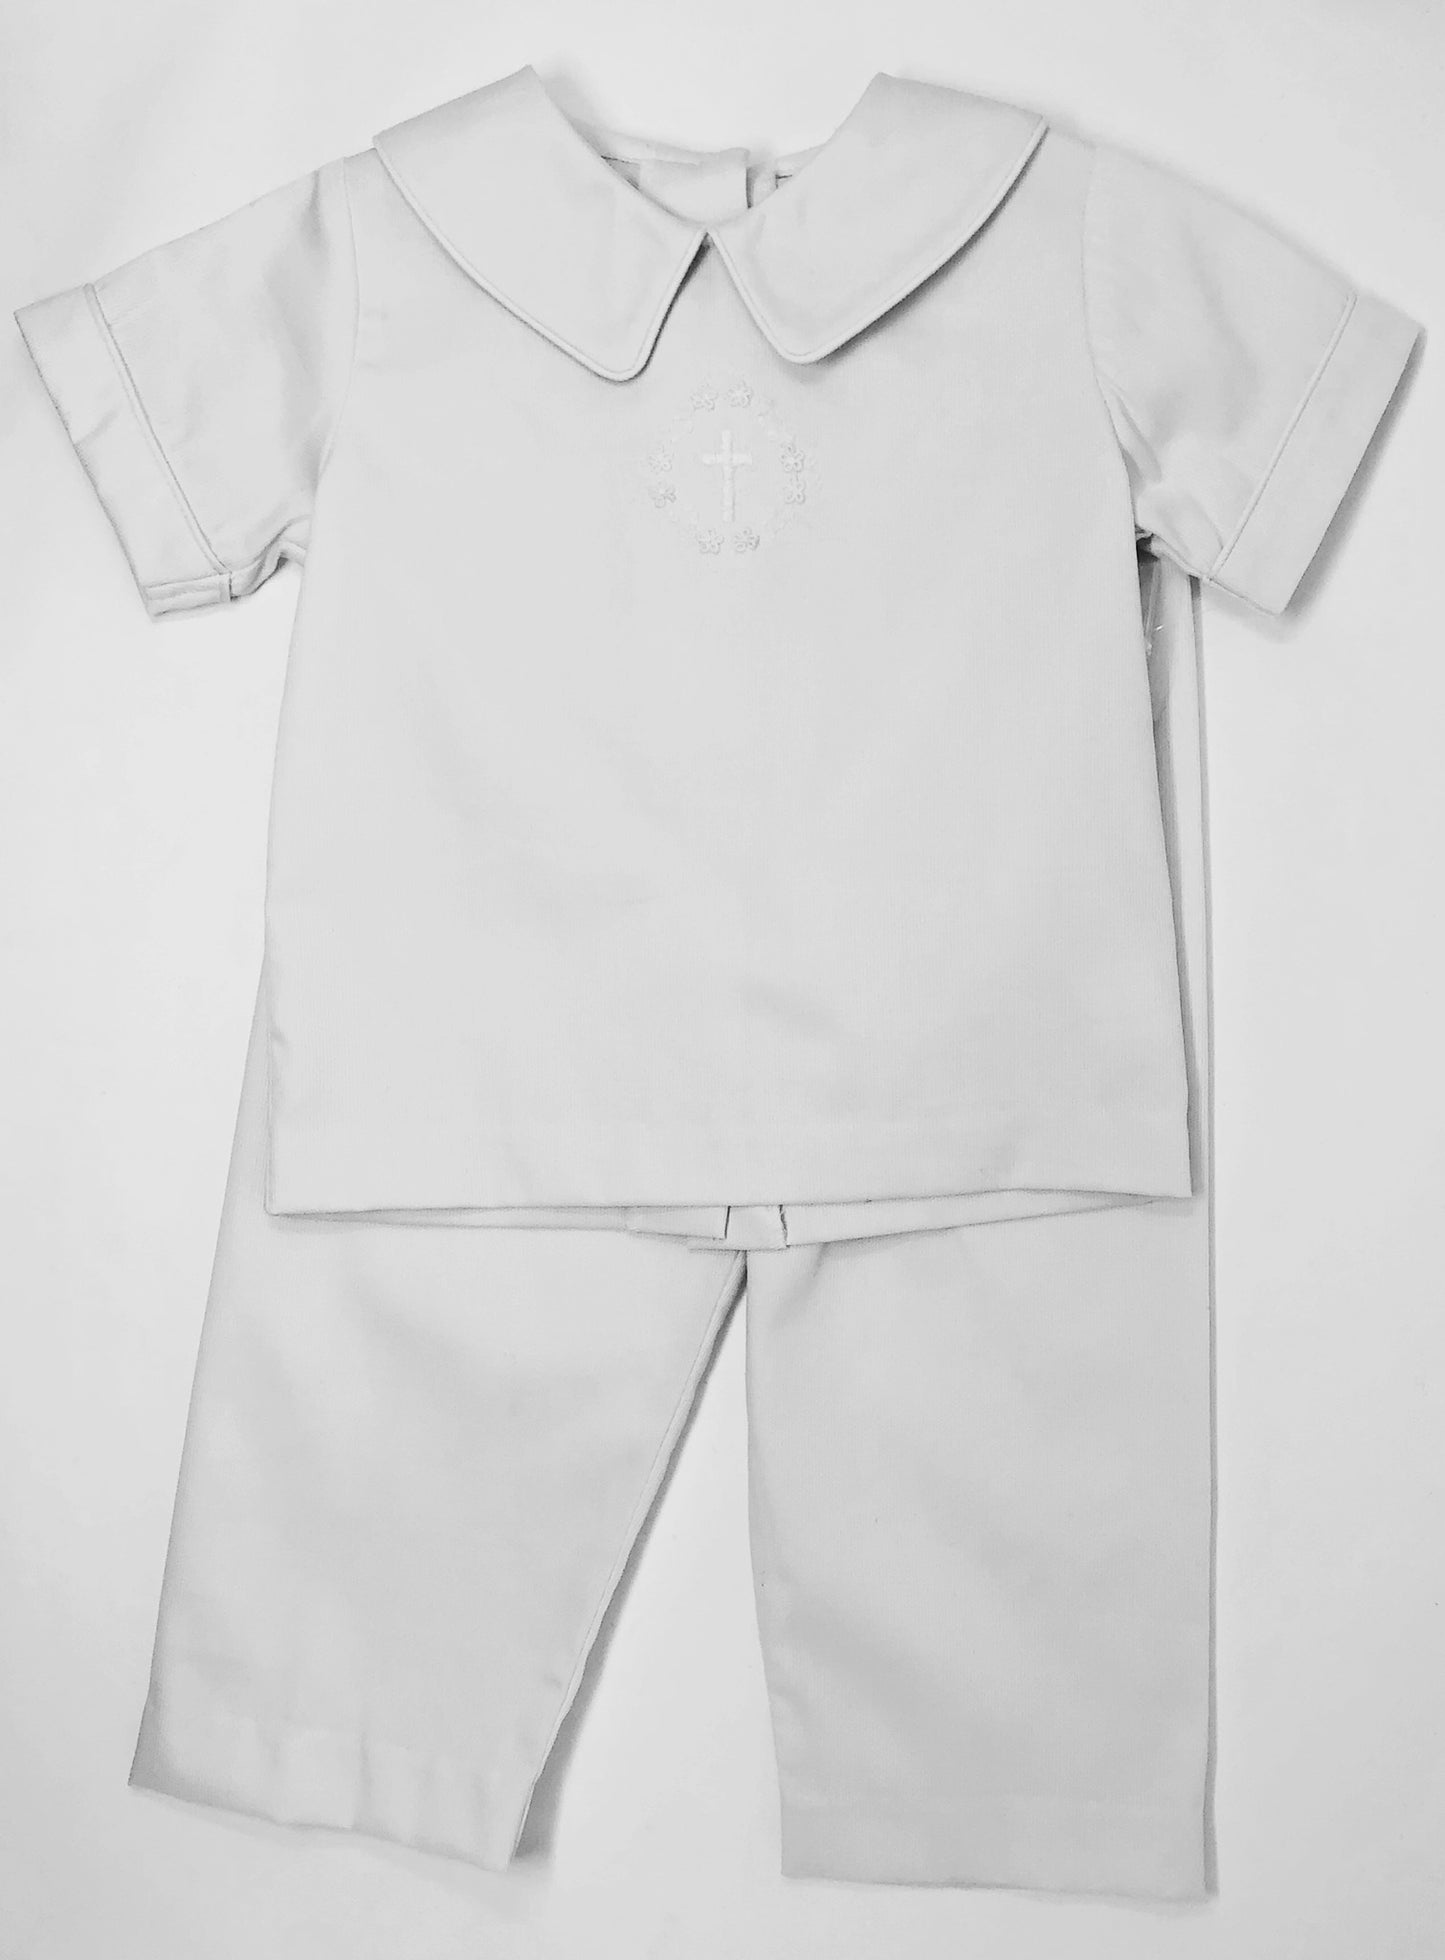 Hand Embroidered Boy Cross Peter Pan Collard Pantset Clothing Zuccini   